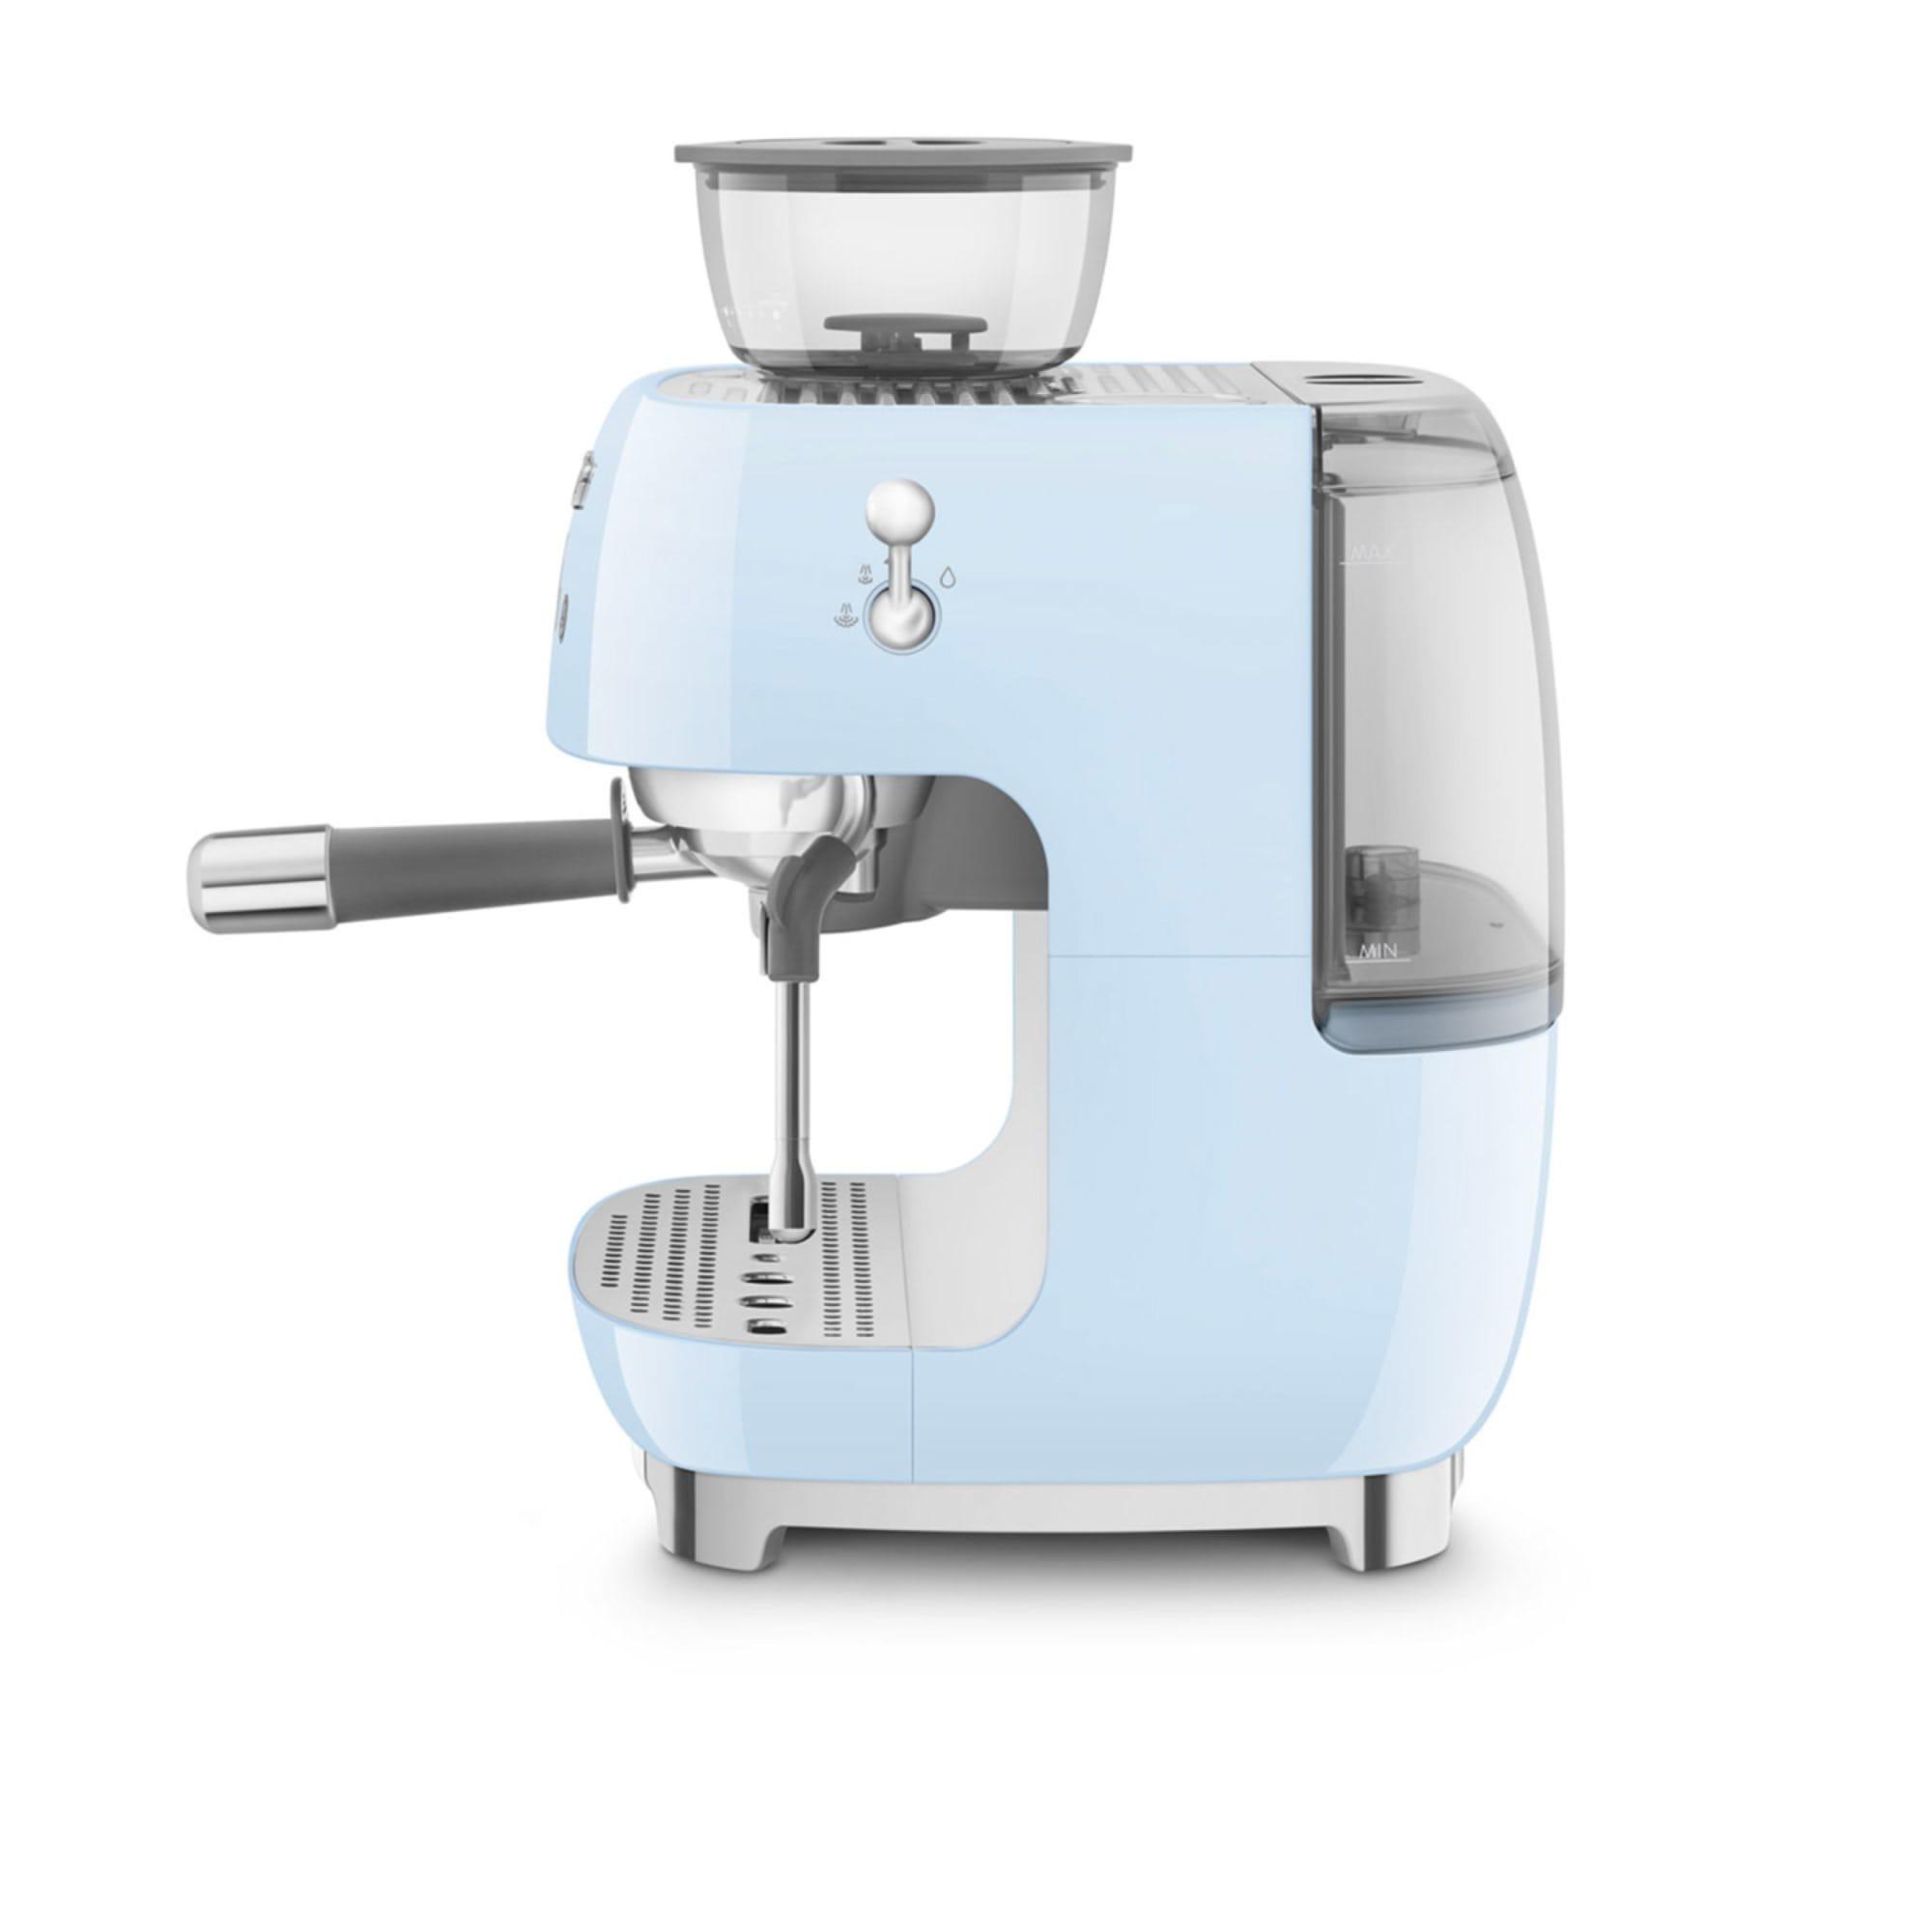 Smeg 50's Retro Style Espresso Machine with Built In Grinder Pastel Blue Image 7